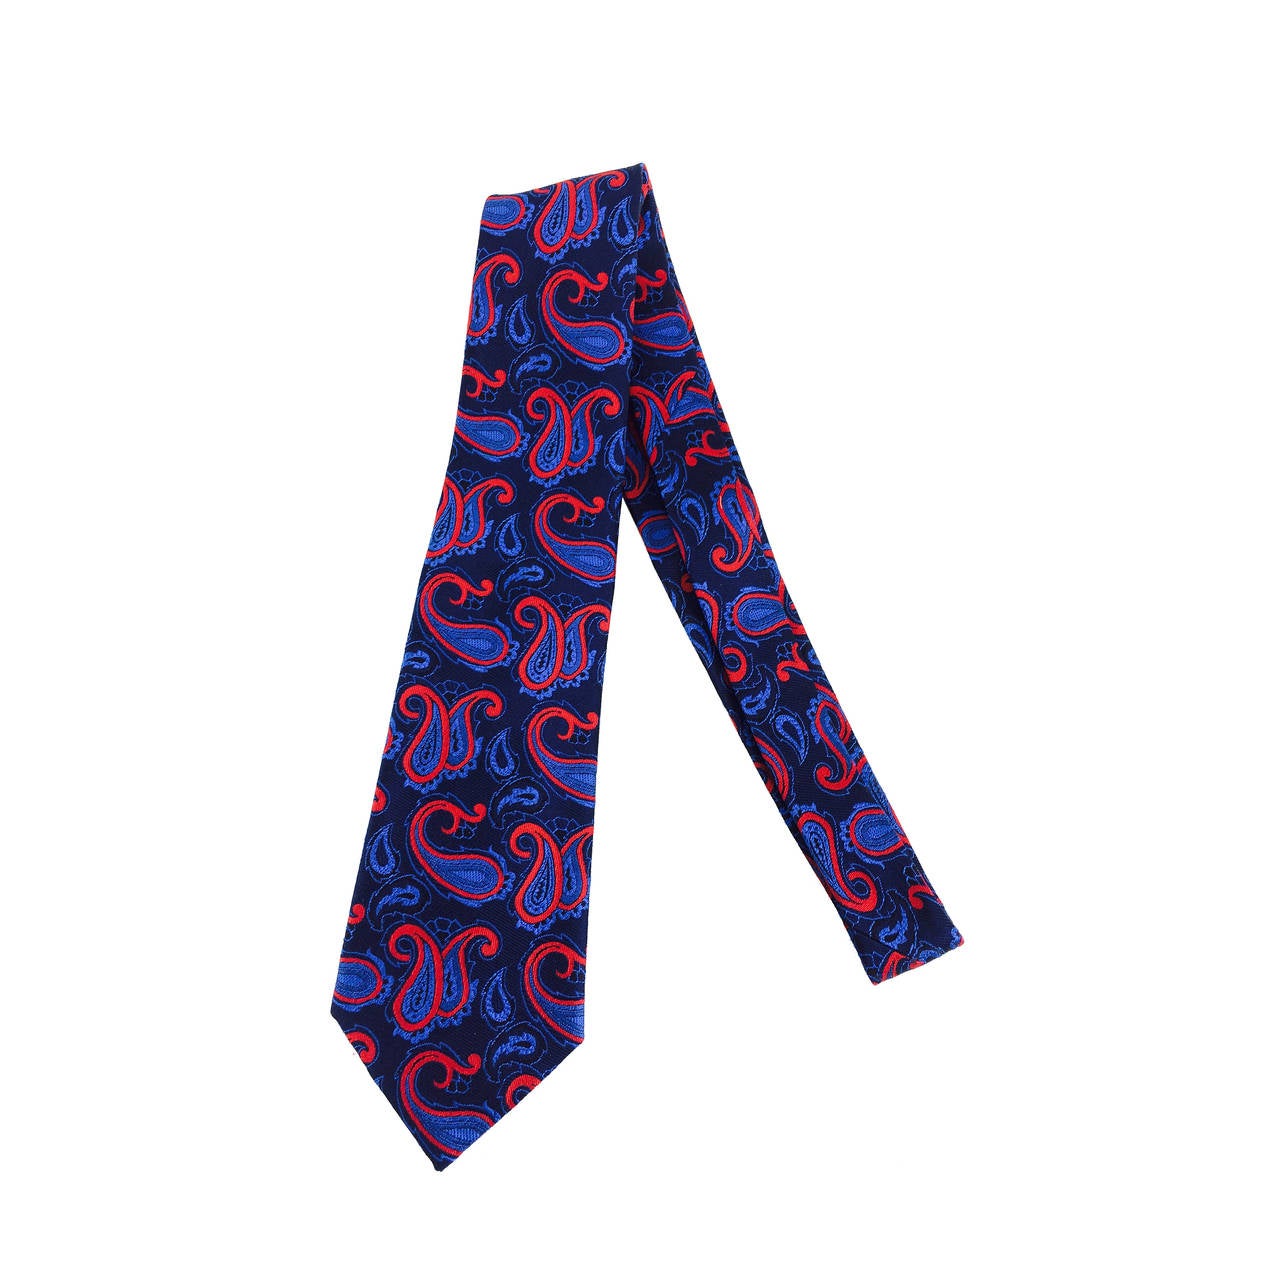 Turnbull & Asser navy blue & red paisley silk twill tie